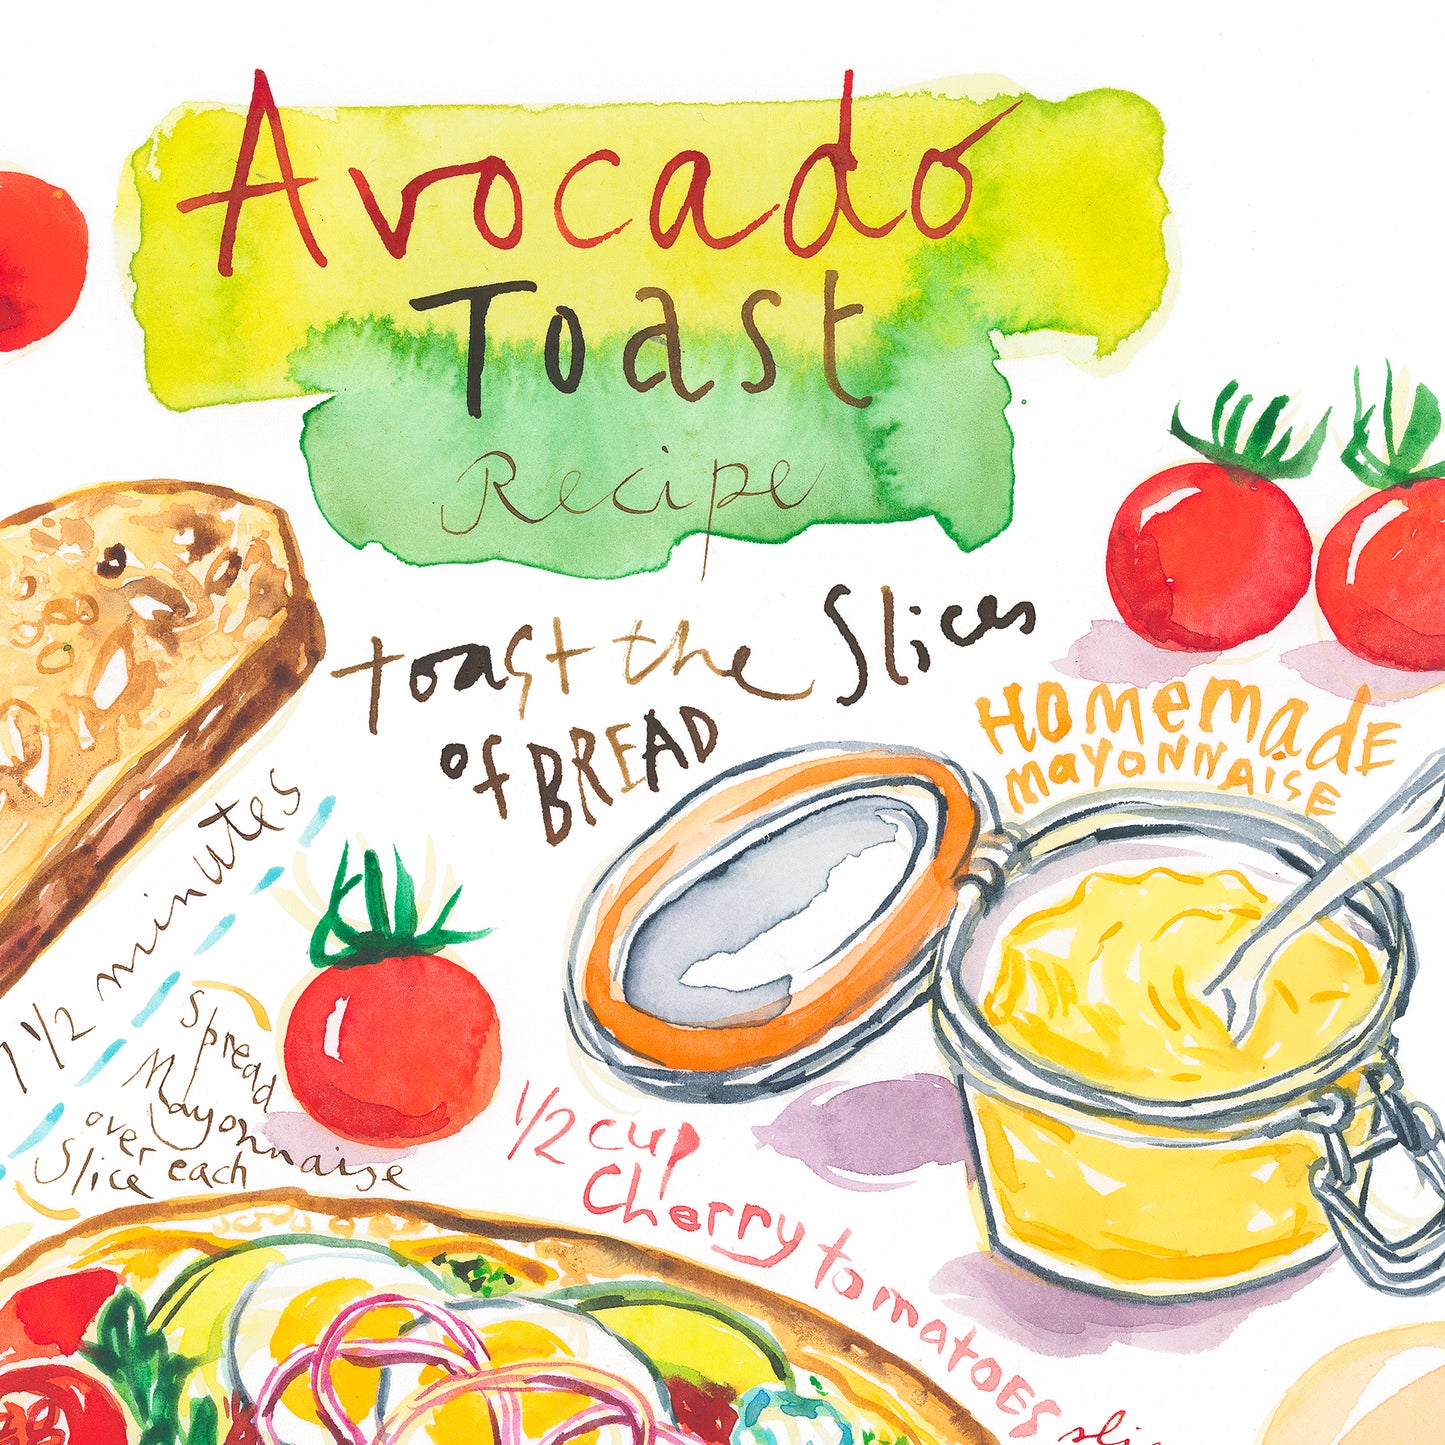 Avocado Toast recipe